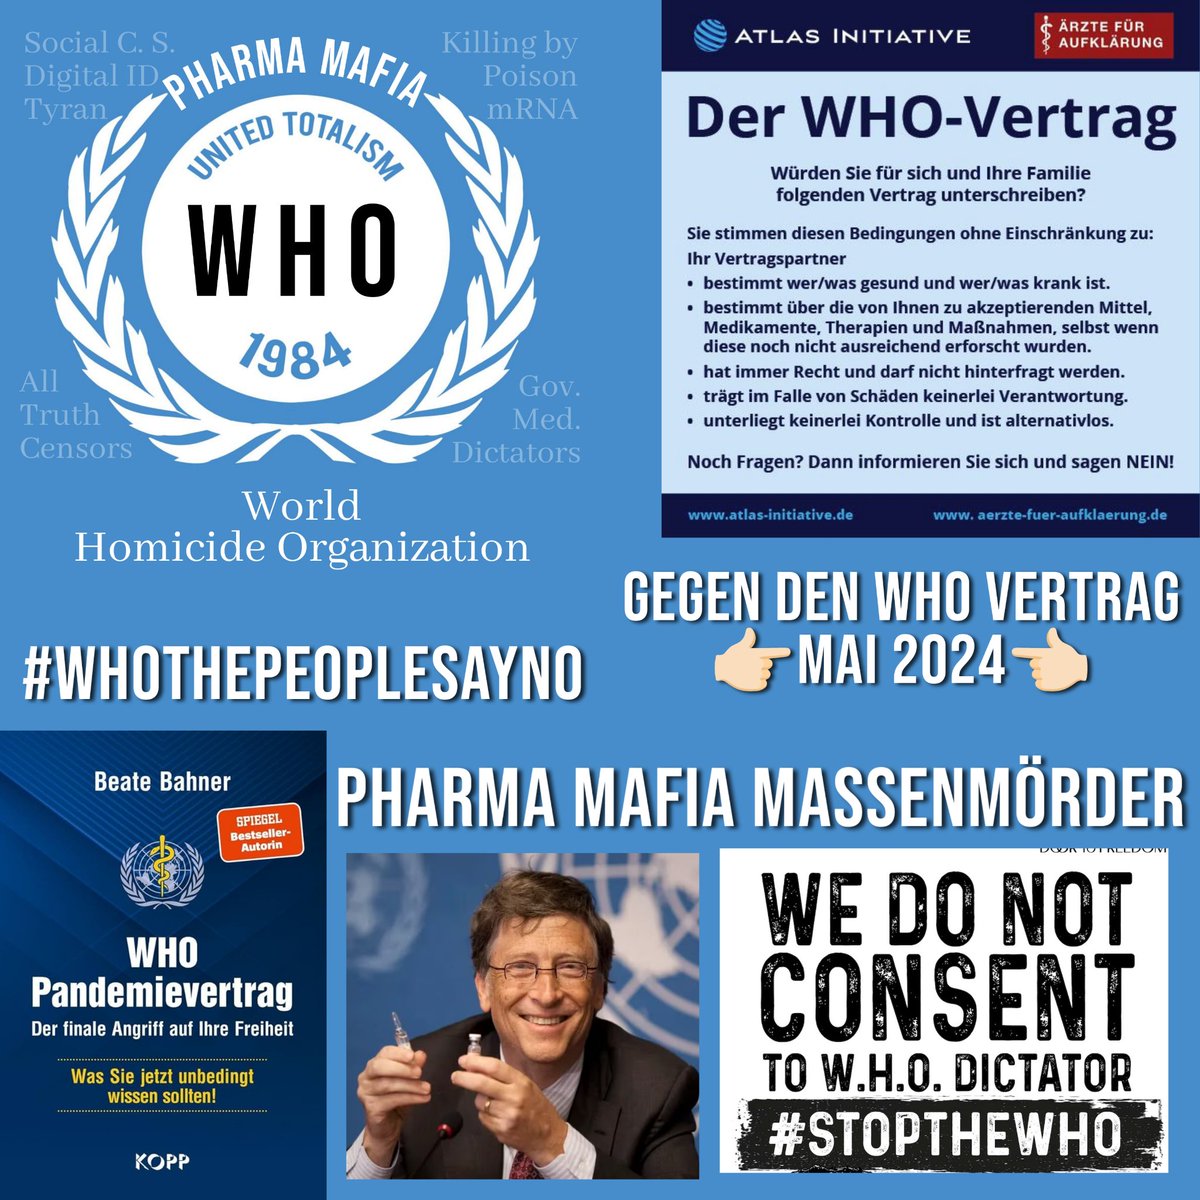 #Who #whovertrag #whothepeoplesayno 

Massenmörder Pharma Mafia auflösen ❗❗❗❗❗